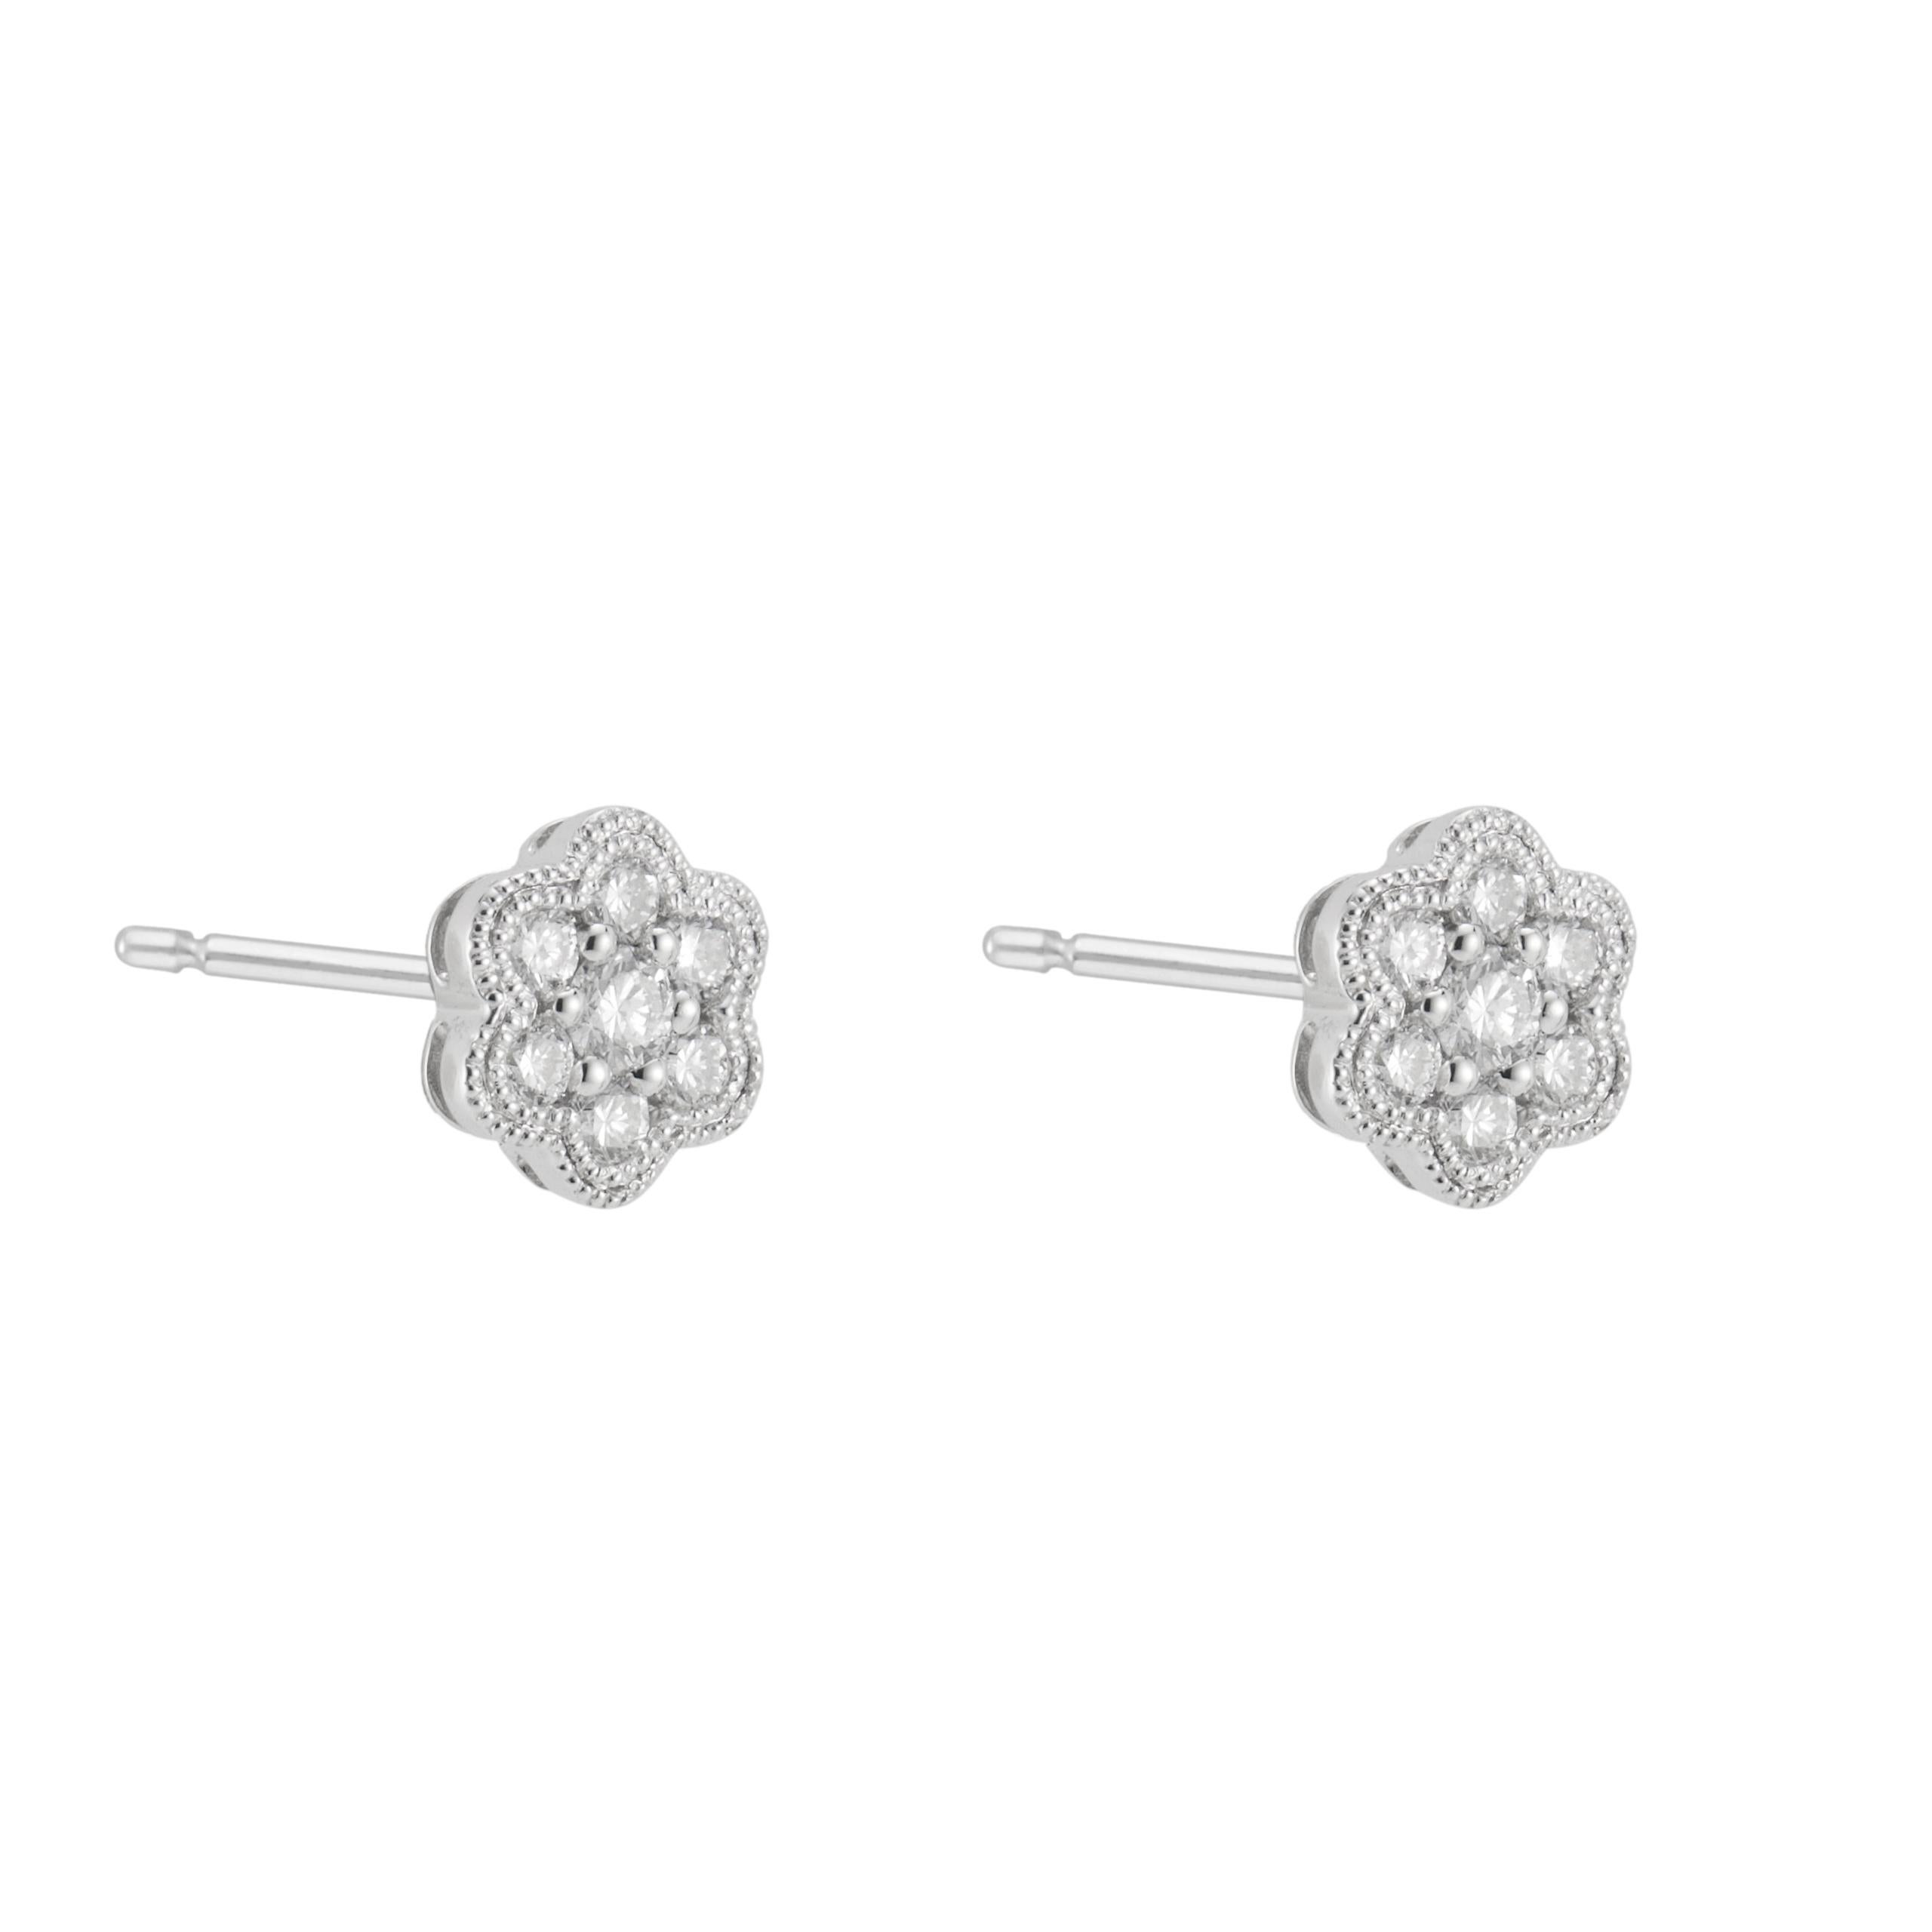 .25 carat diamond earrings